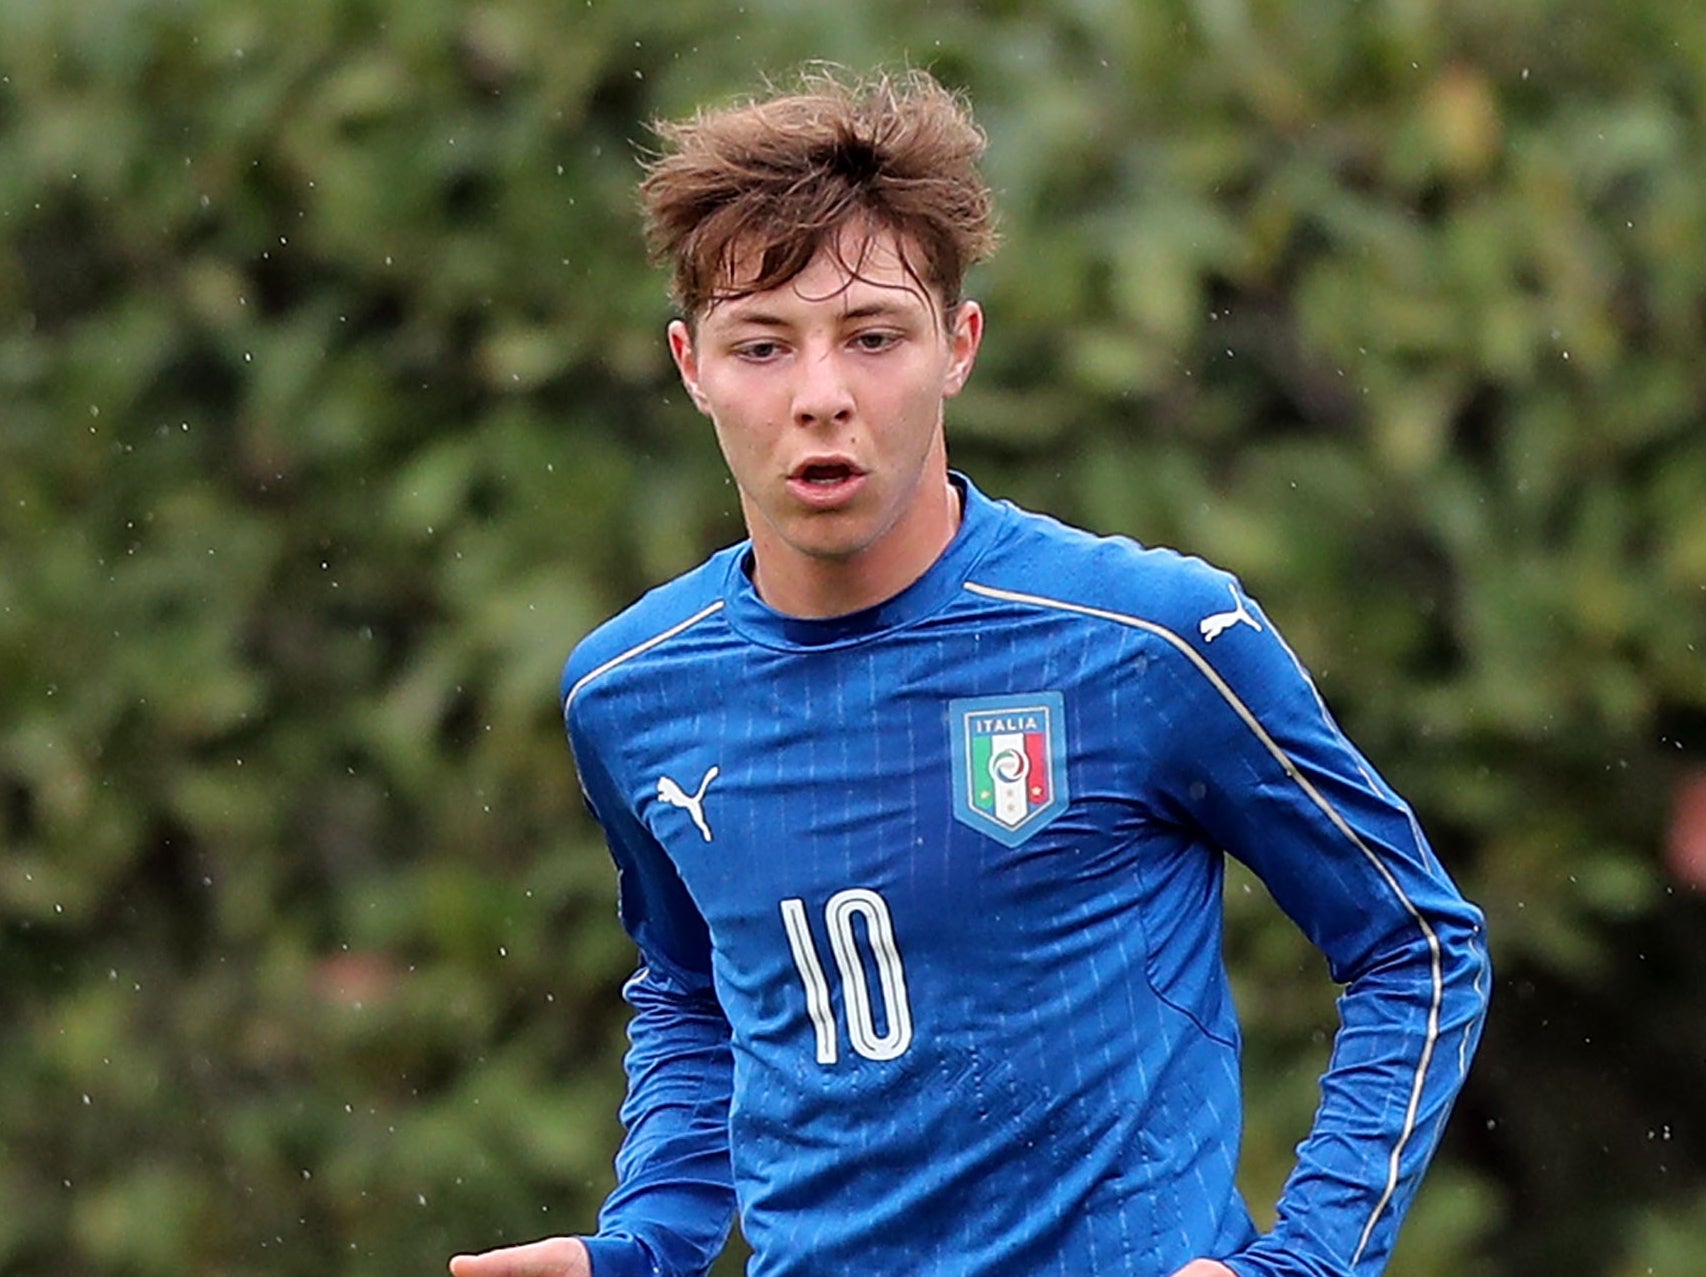 Lazio midfielder Daniel Guerini has passed away, aged 19